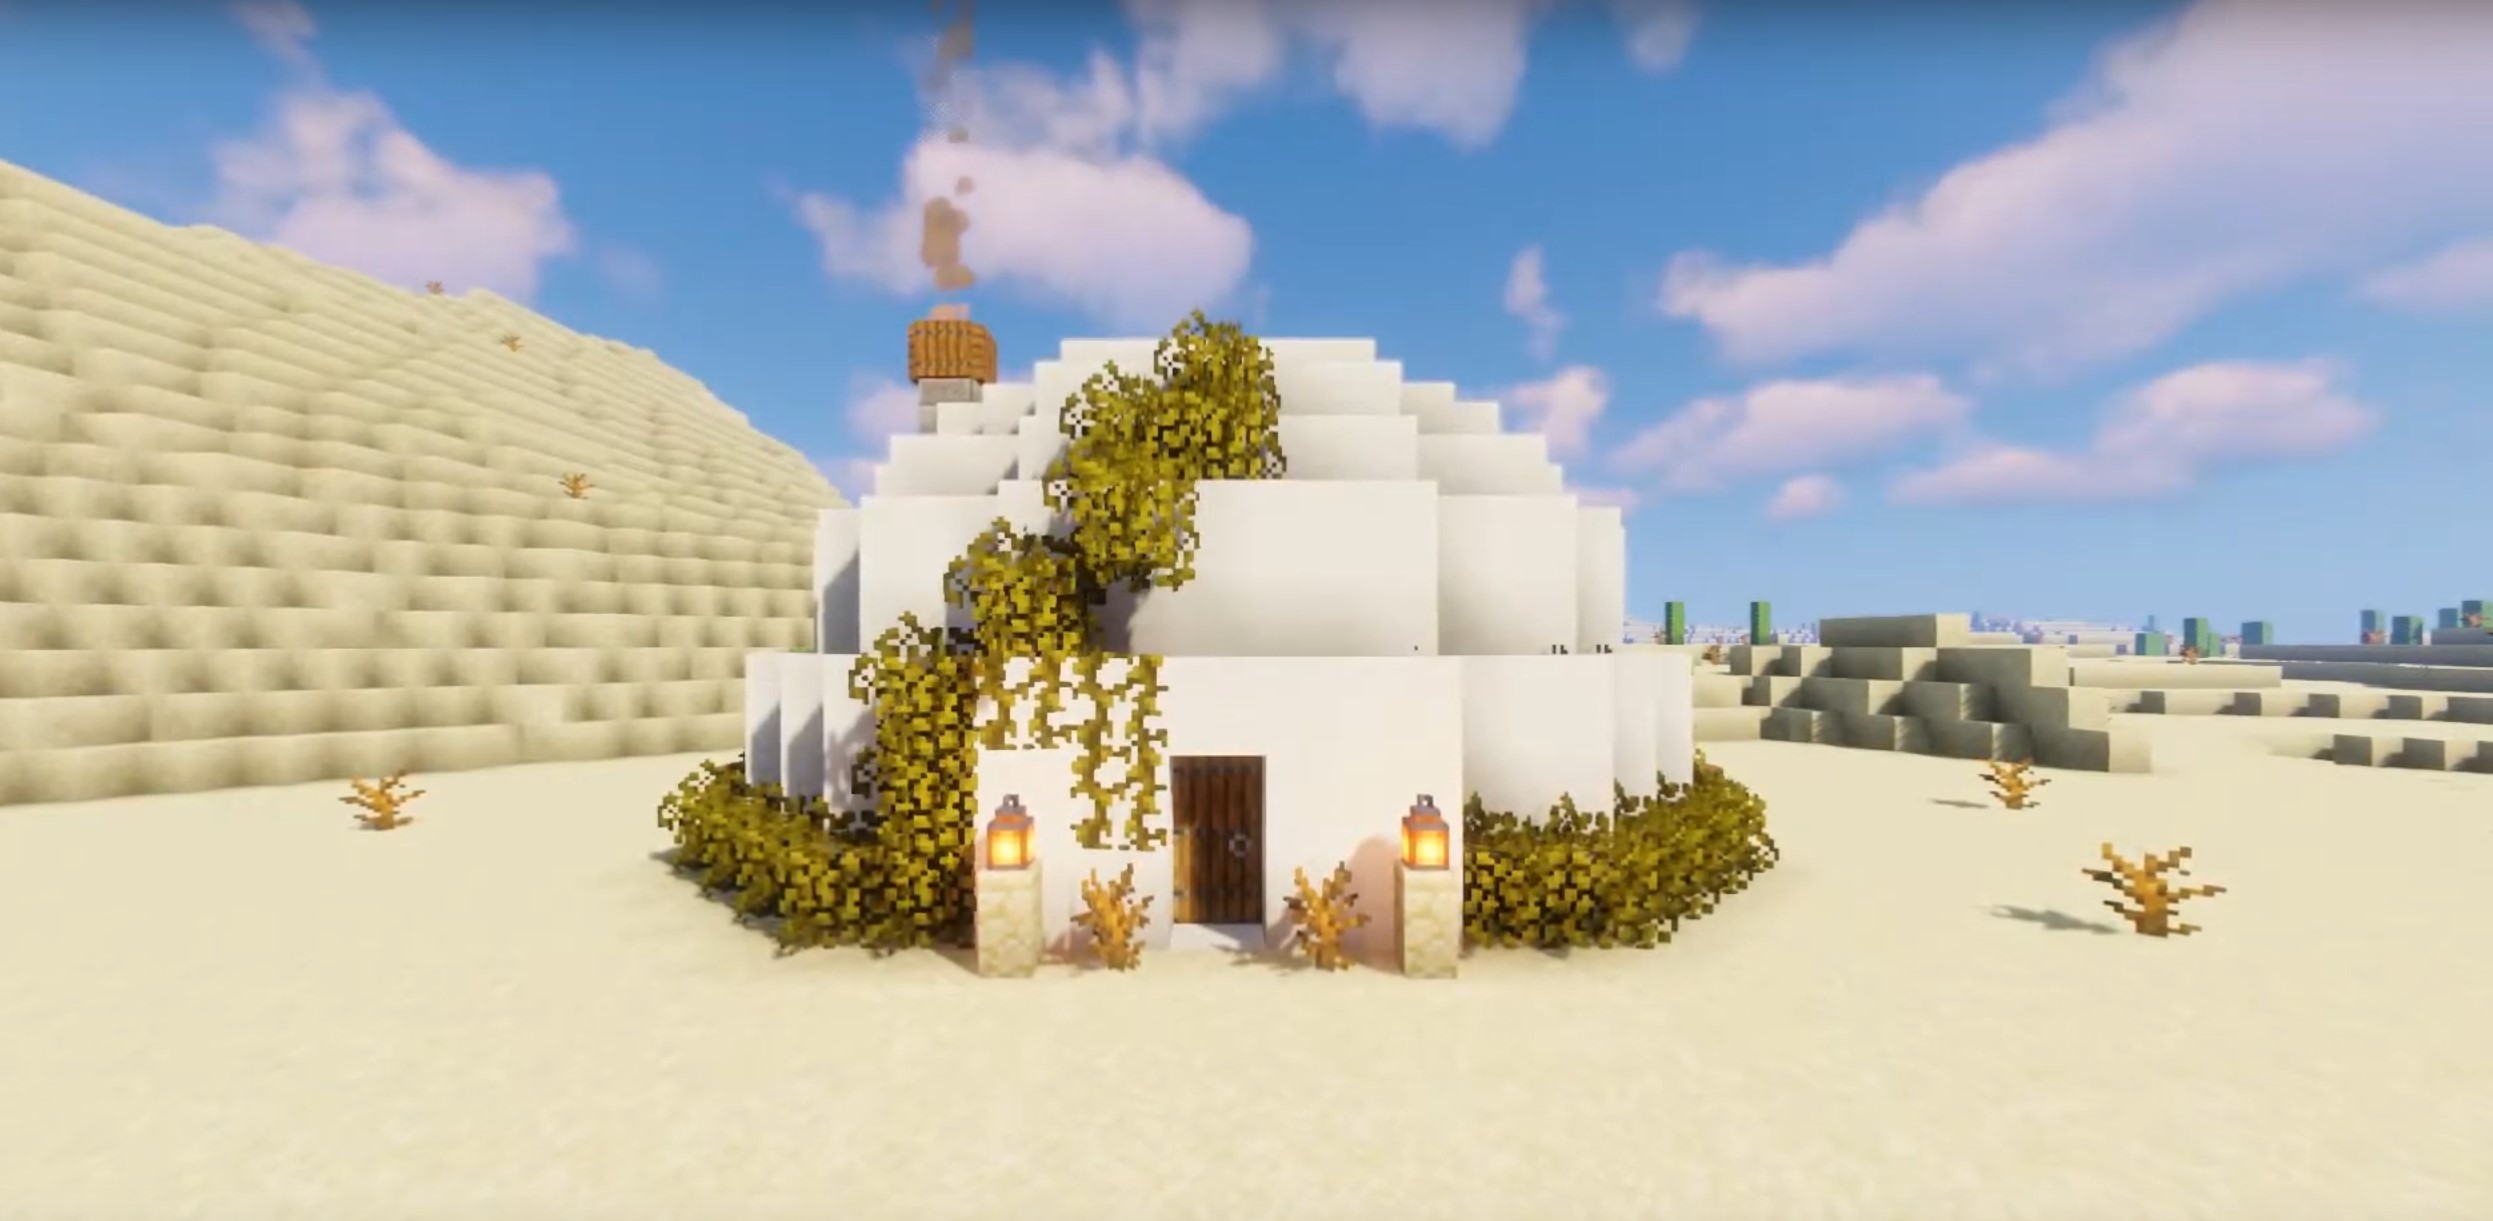 Beautiful Dome House in the Desert minecraft idea